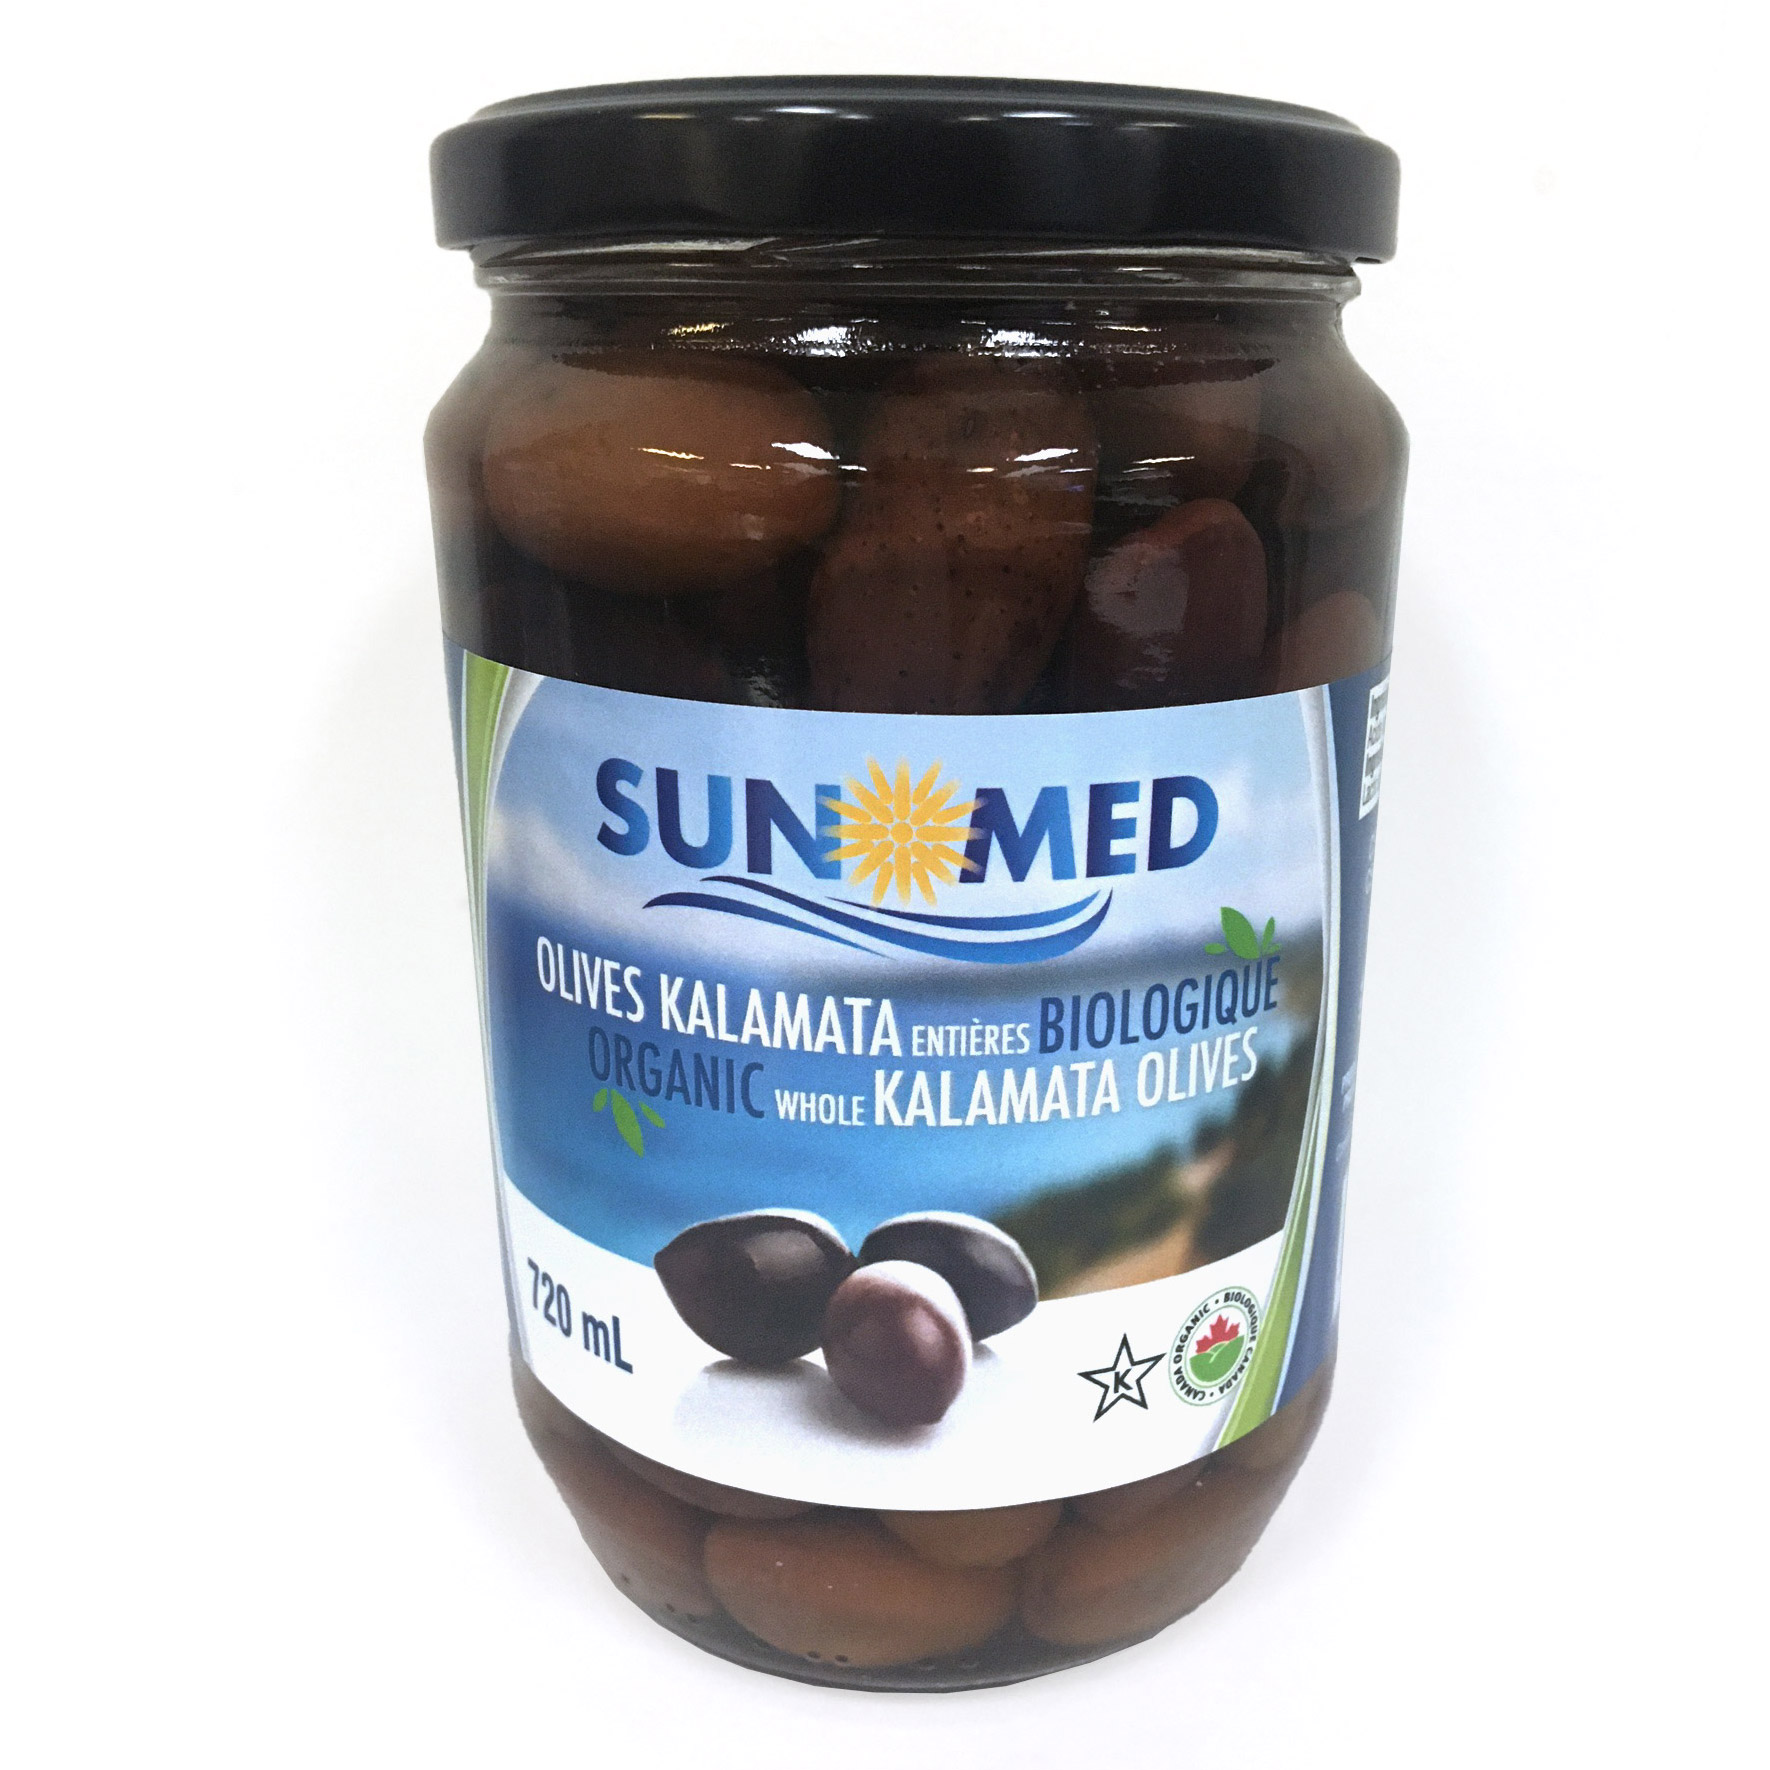 Organic kalamata whole olives in glass jars – 720ml